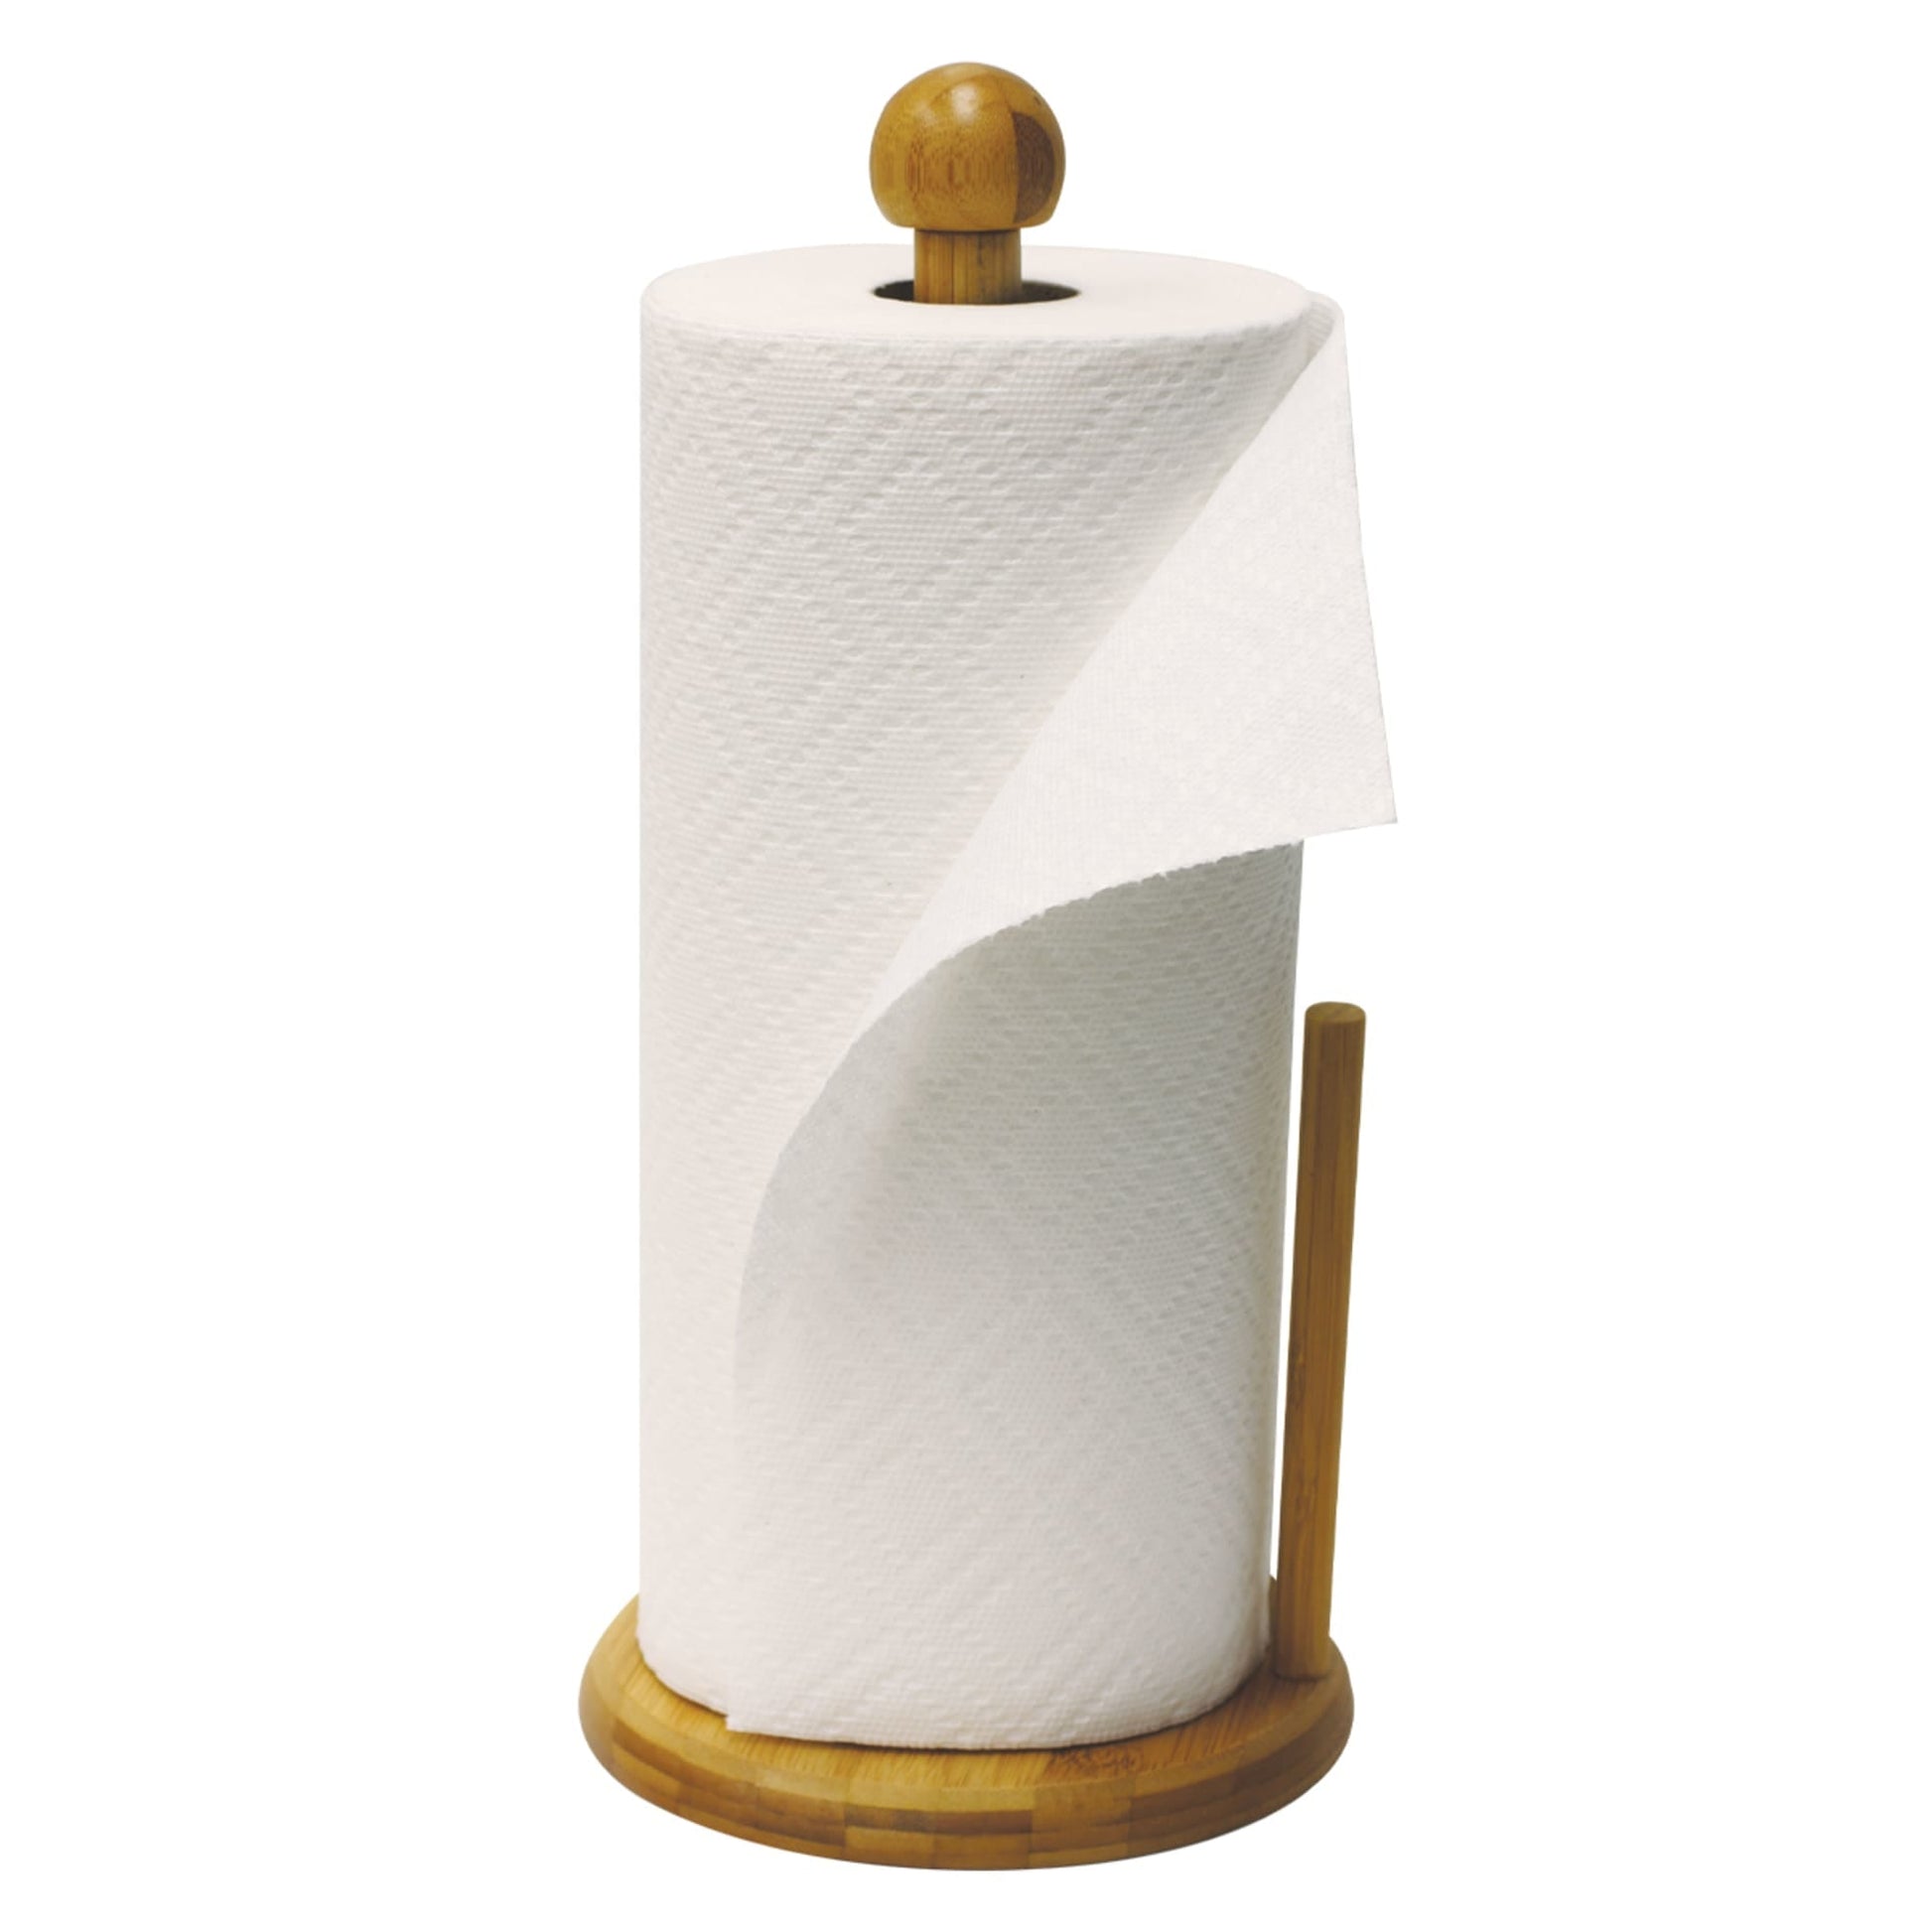 Michael Graves Design Freestanding Bamboo Paper Towel Holder with Side Bar,  Natural, KITCHEN ORGANIZATION